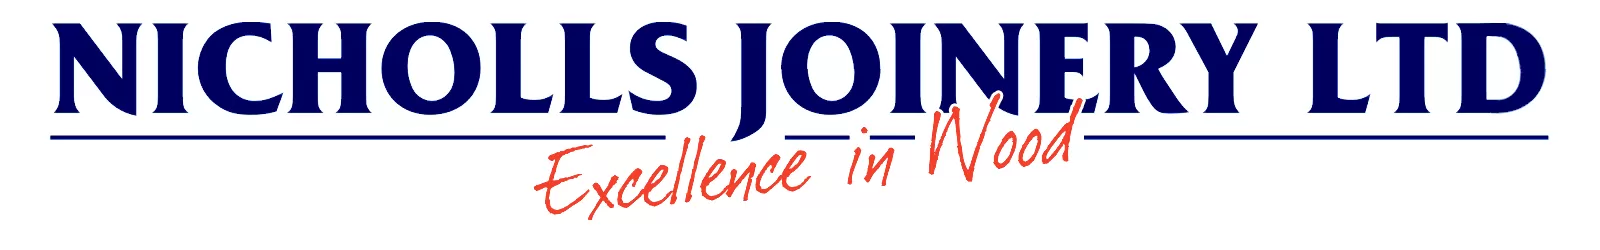 Nicholls Joinery LTD logo